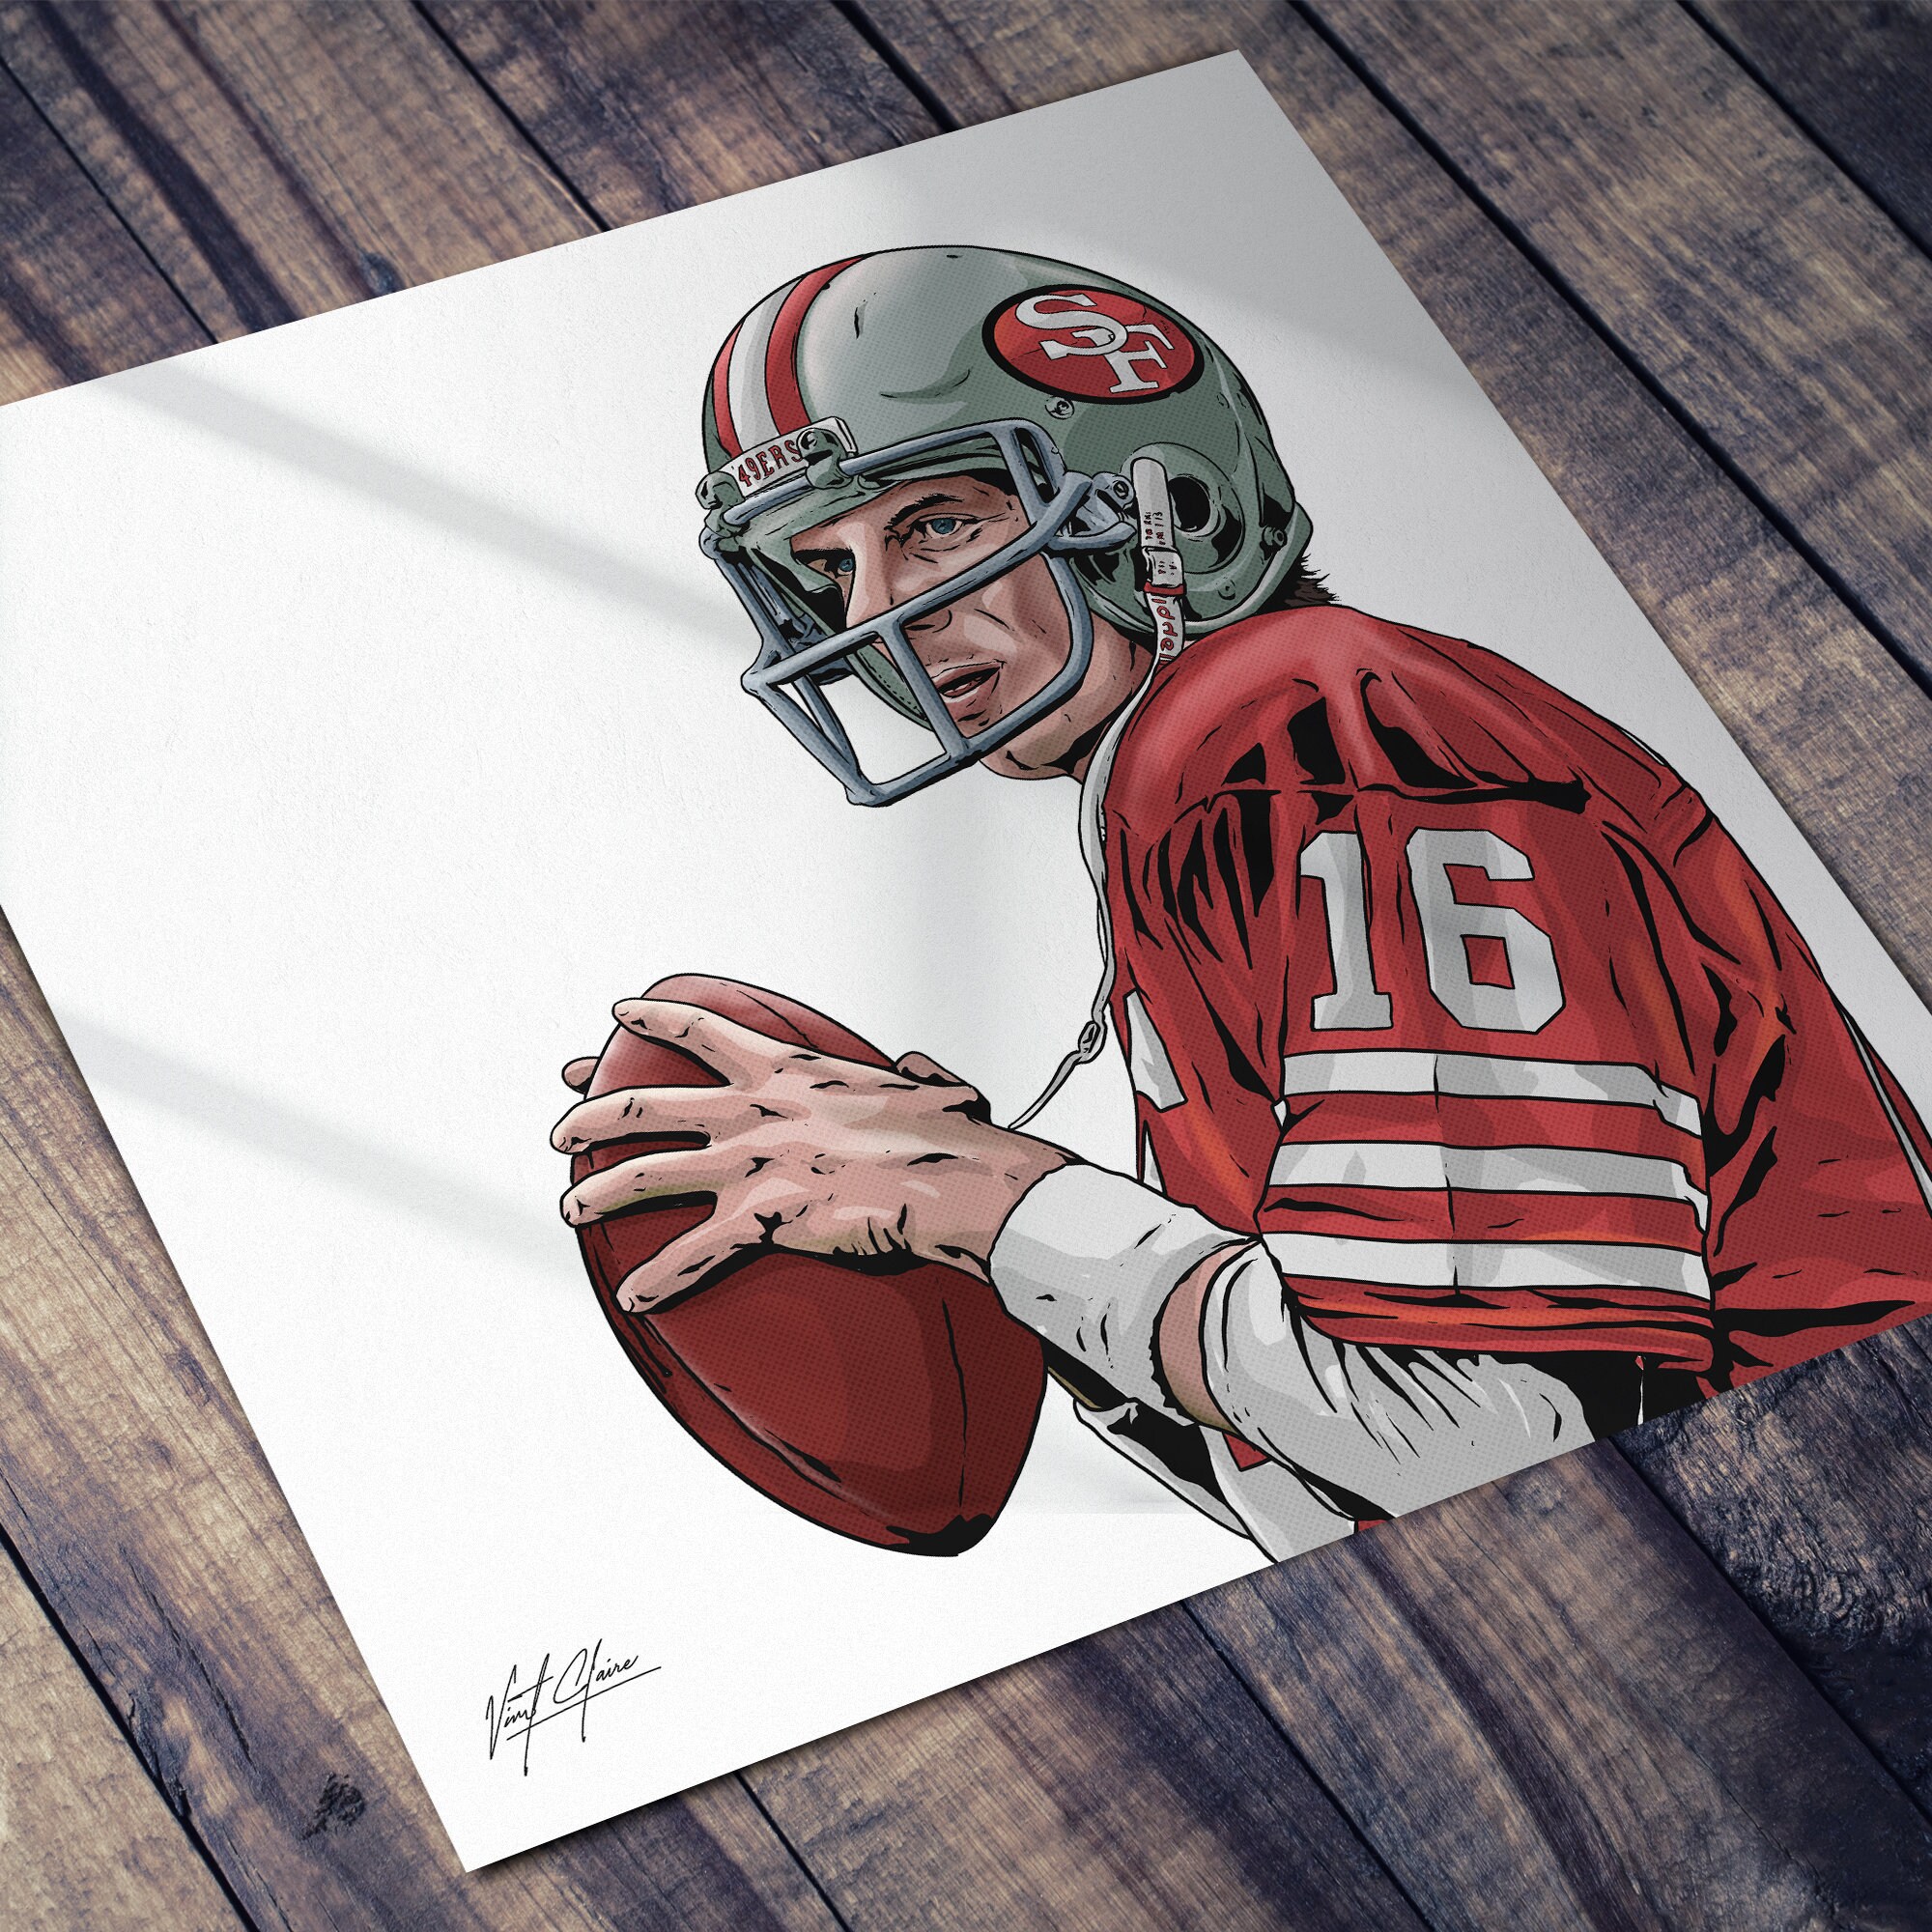 Joe Montana San Francisco 49ers Football Portrait Drawing Art Poster Print, Joe Montana Poster, Gift for Joe Montana 49ers Fans-1